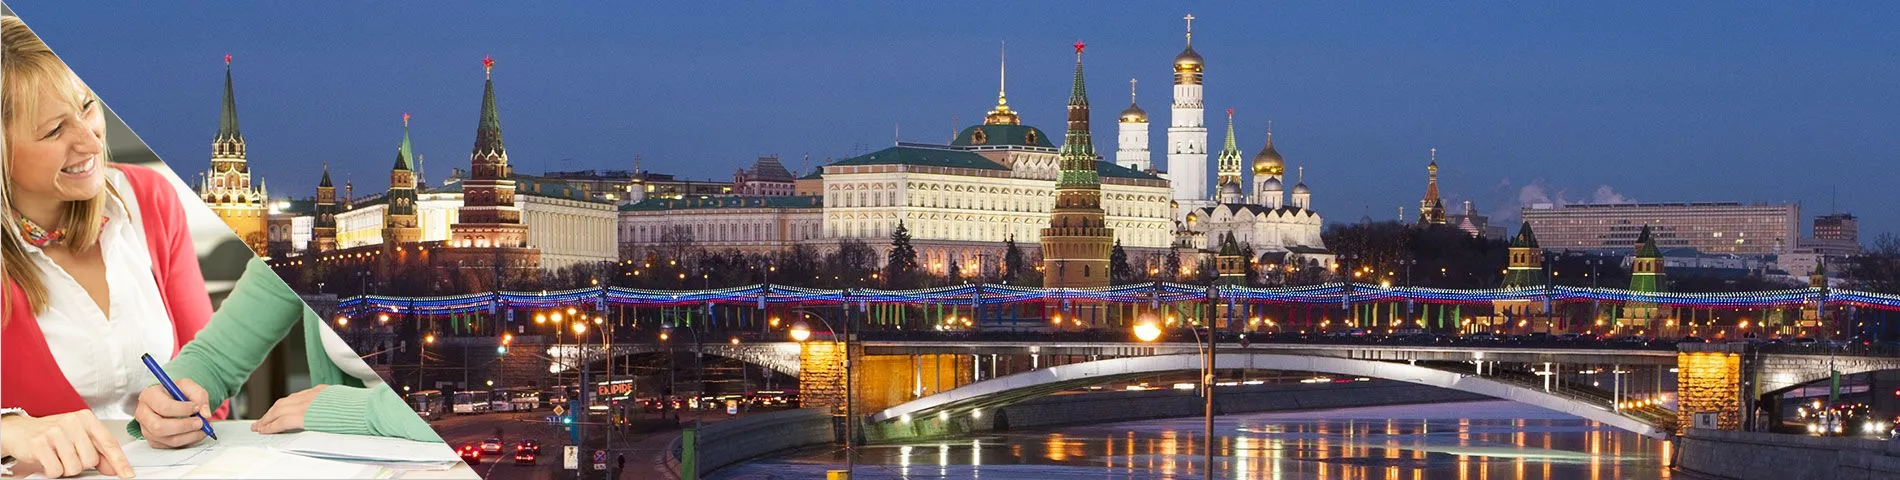 Moskva - Studujte a žijte u svého učitele